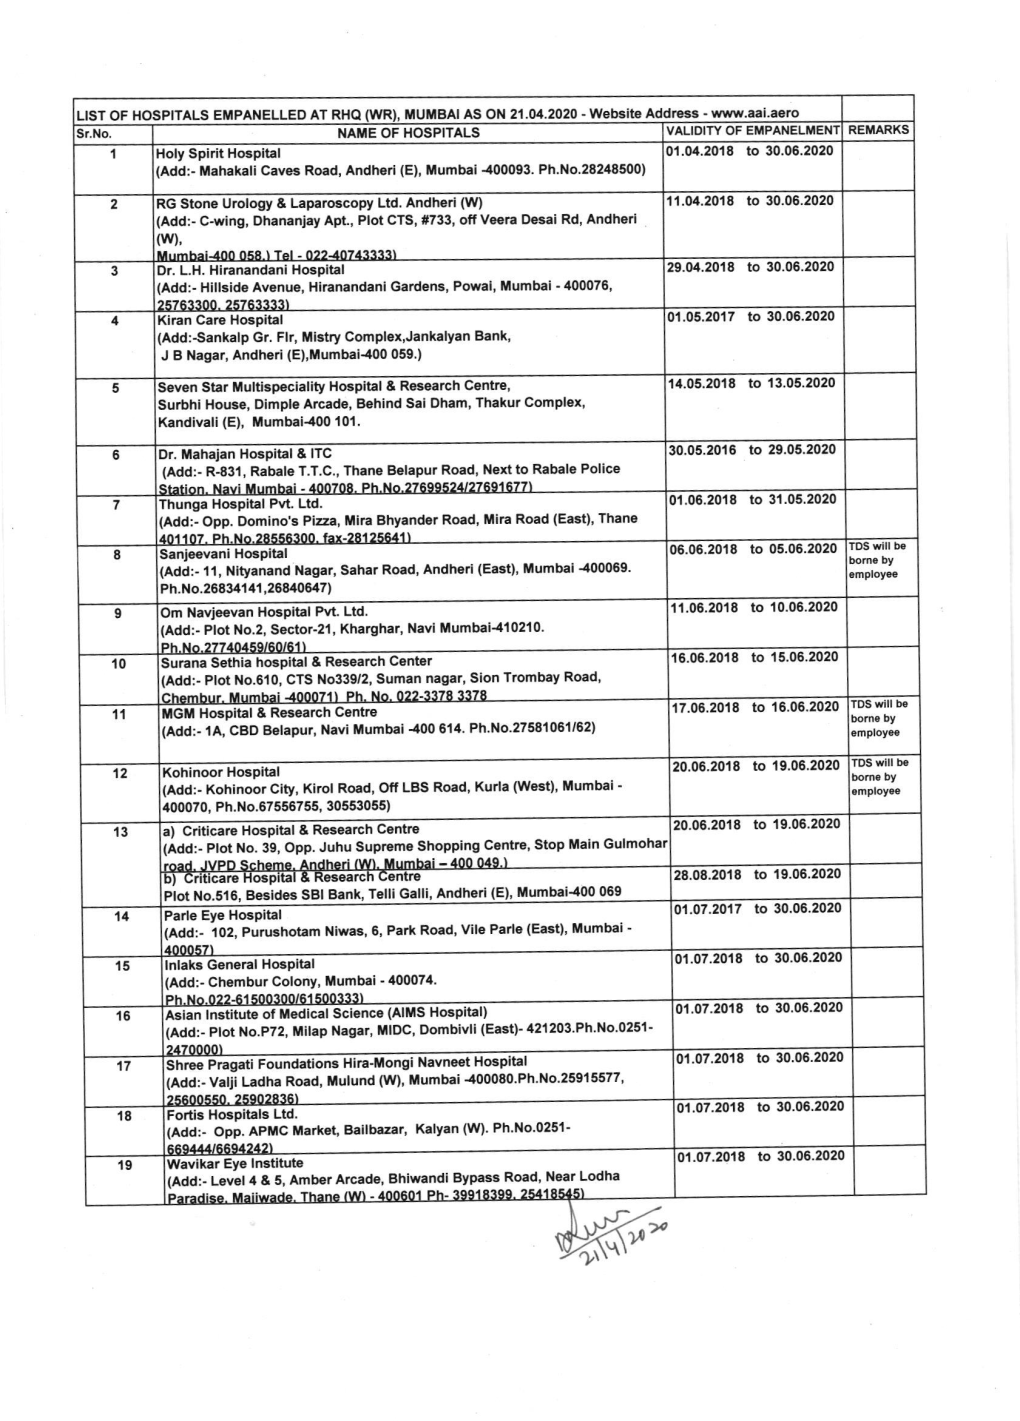 List of Hospitals Empanelled at RHQ(WR), Mumbai As on 21.04.2020